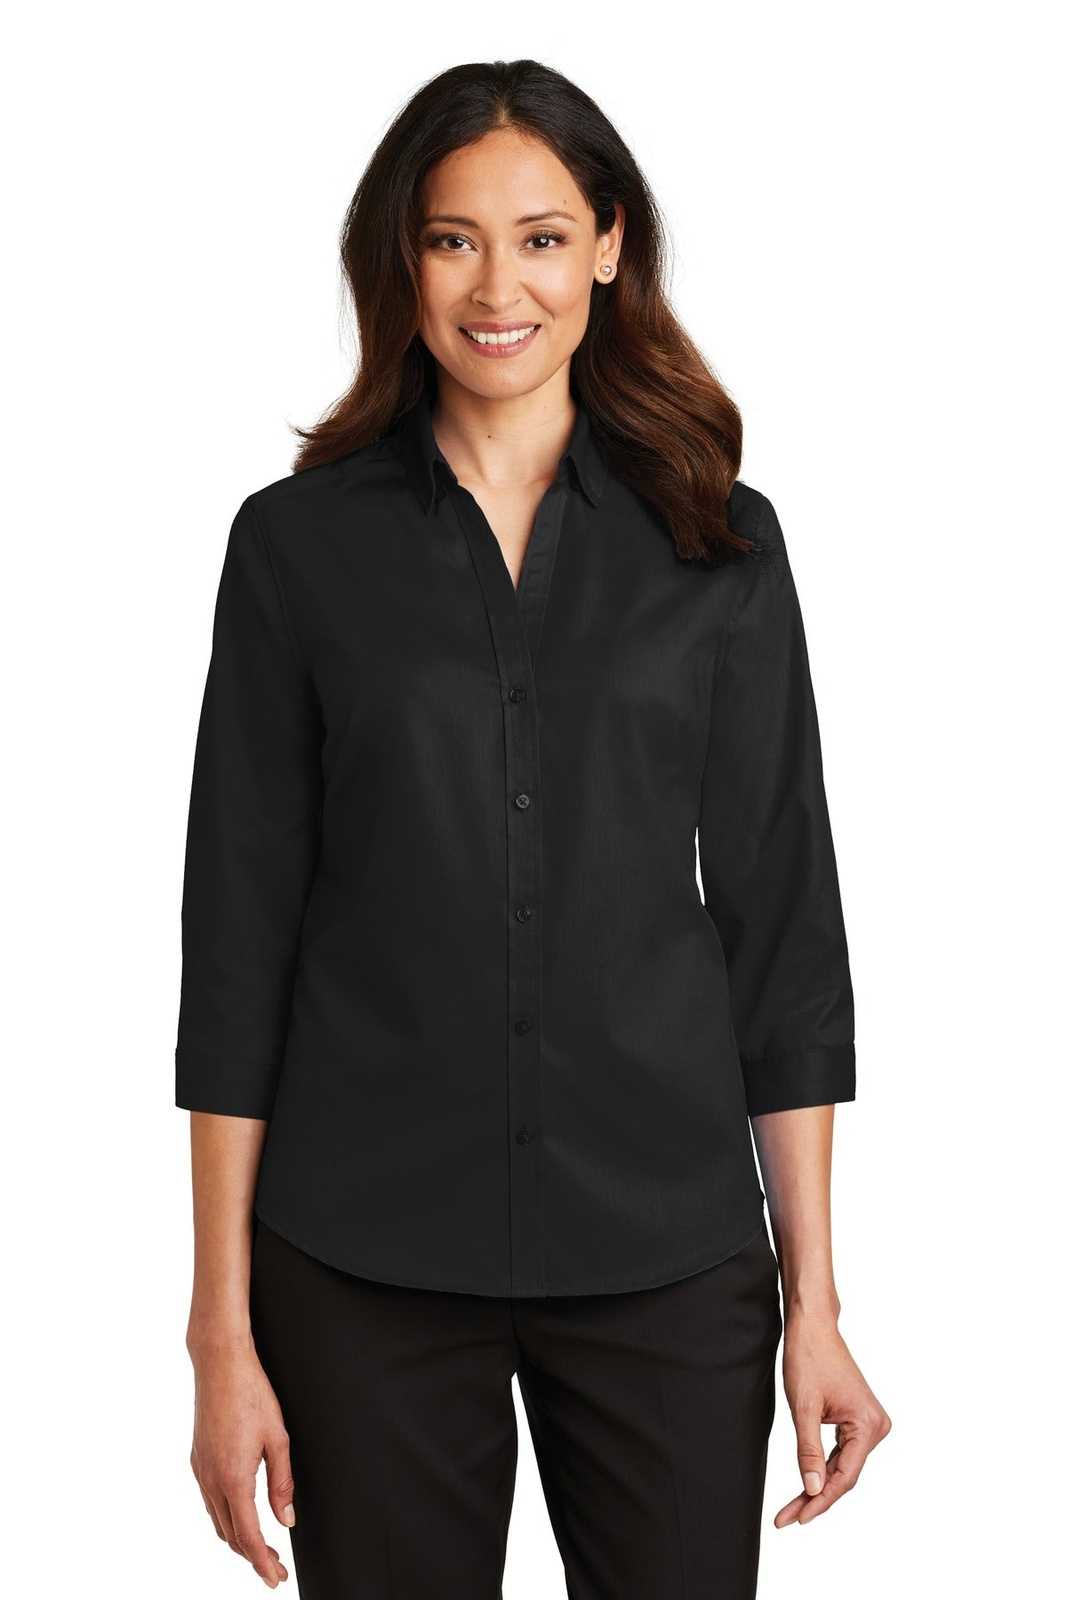 Port Authority L665 Ladies 3/4-Sleeve Superpro Twill Shirt - Black - HIT a Double - 1